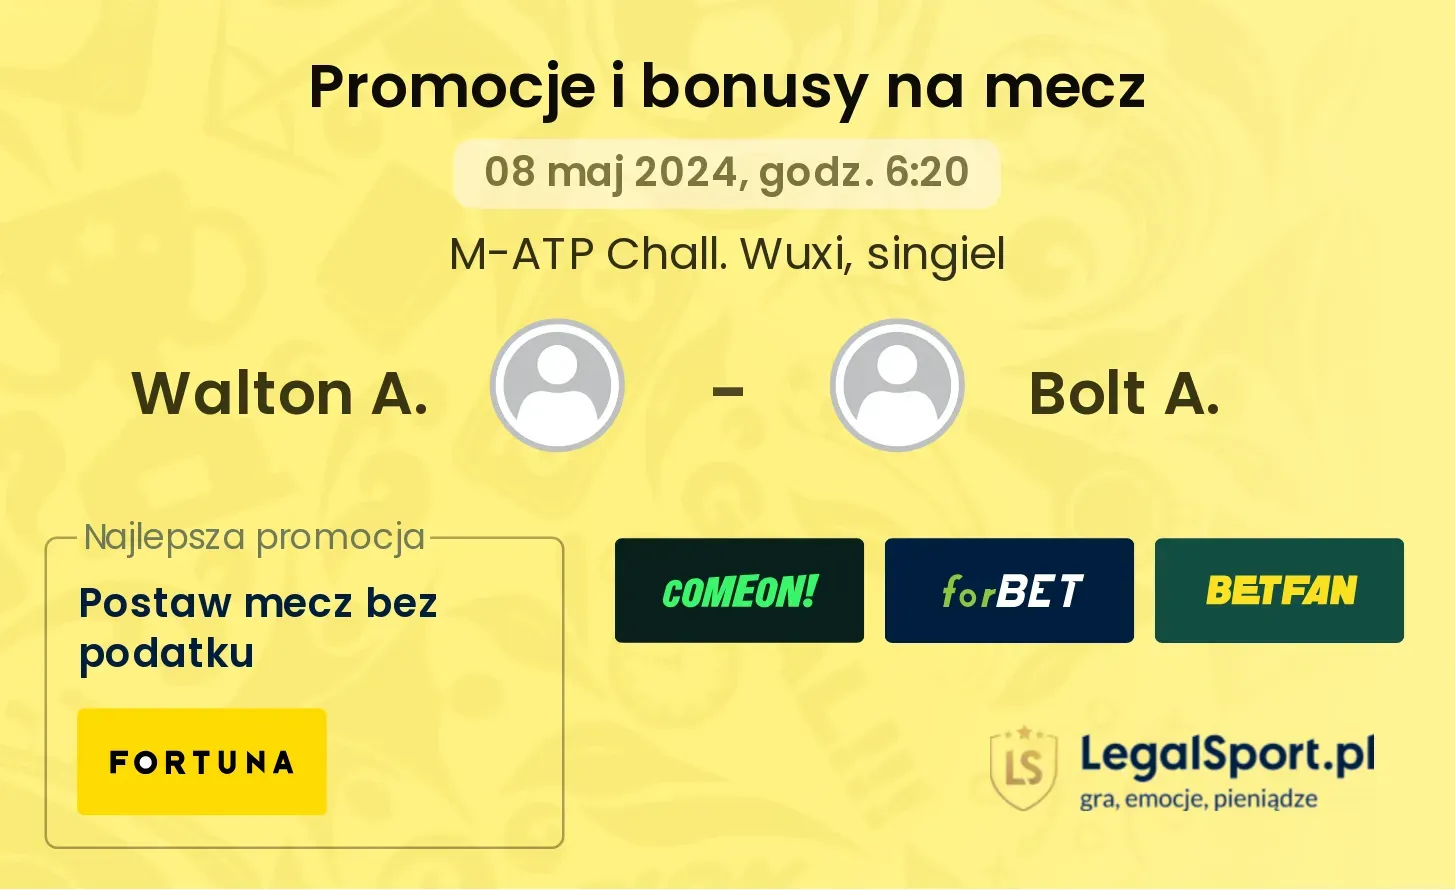 Walton A. - Bolt A. promocje bonusy na mecz